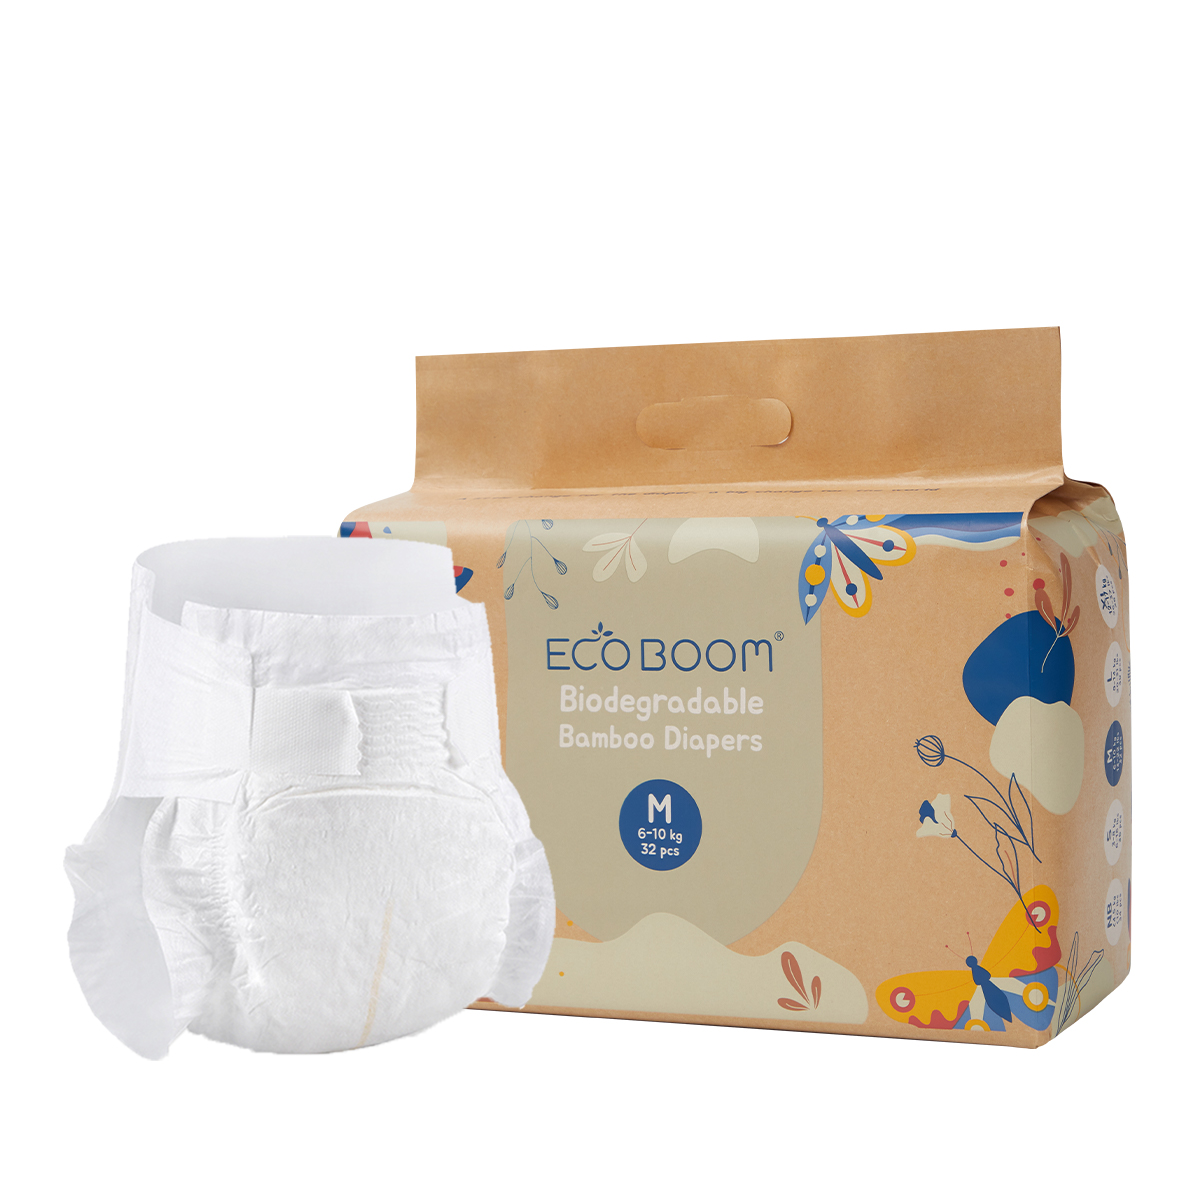 ECO BOOM bamboo baby diaper distribution-2